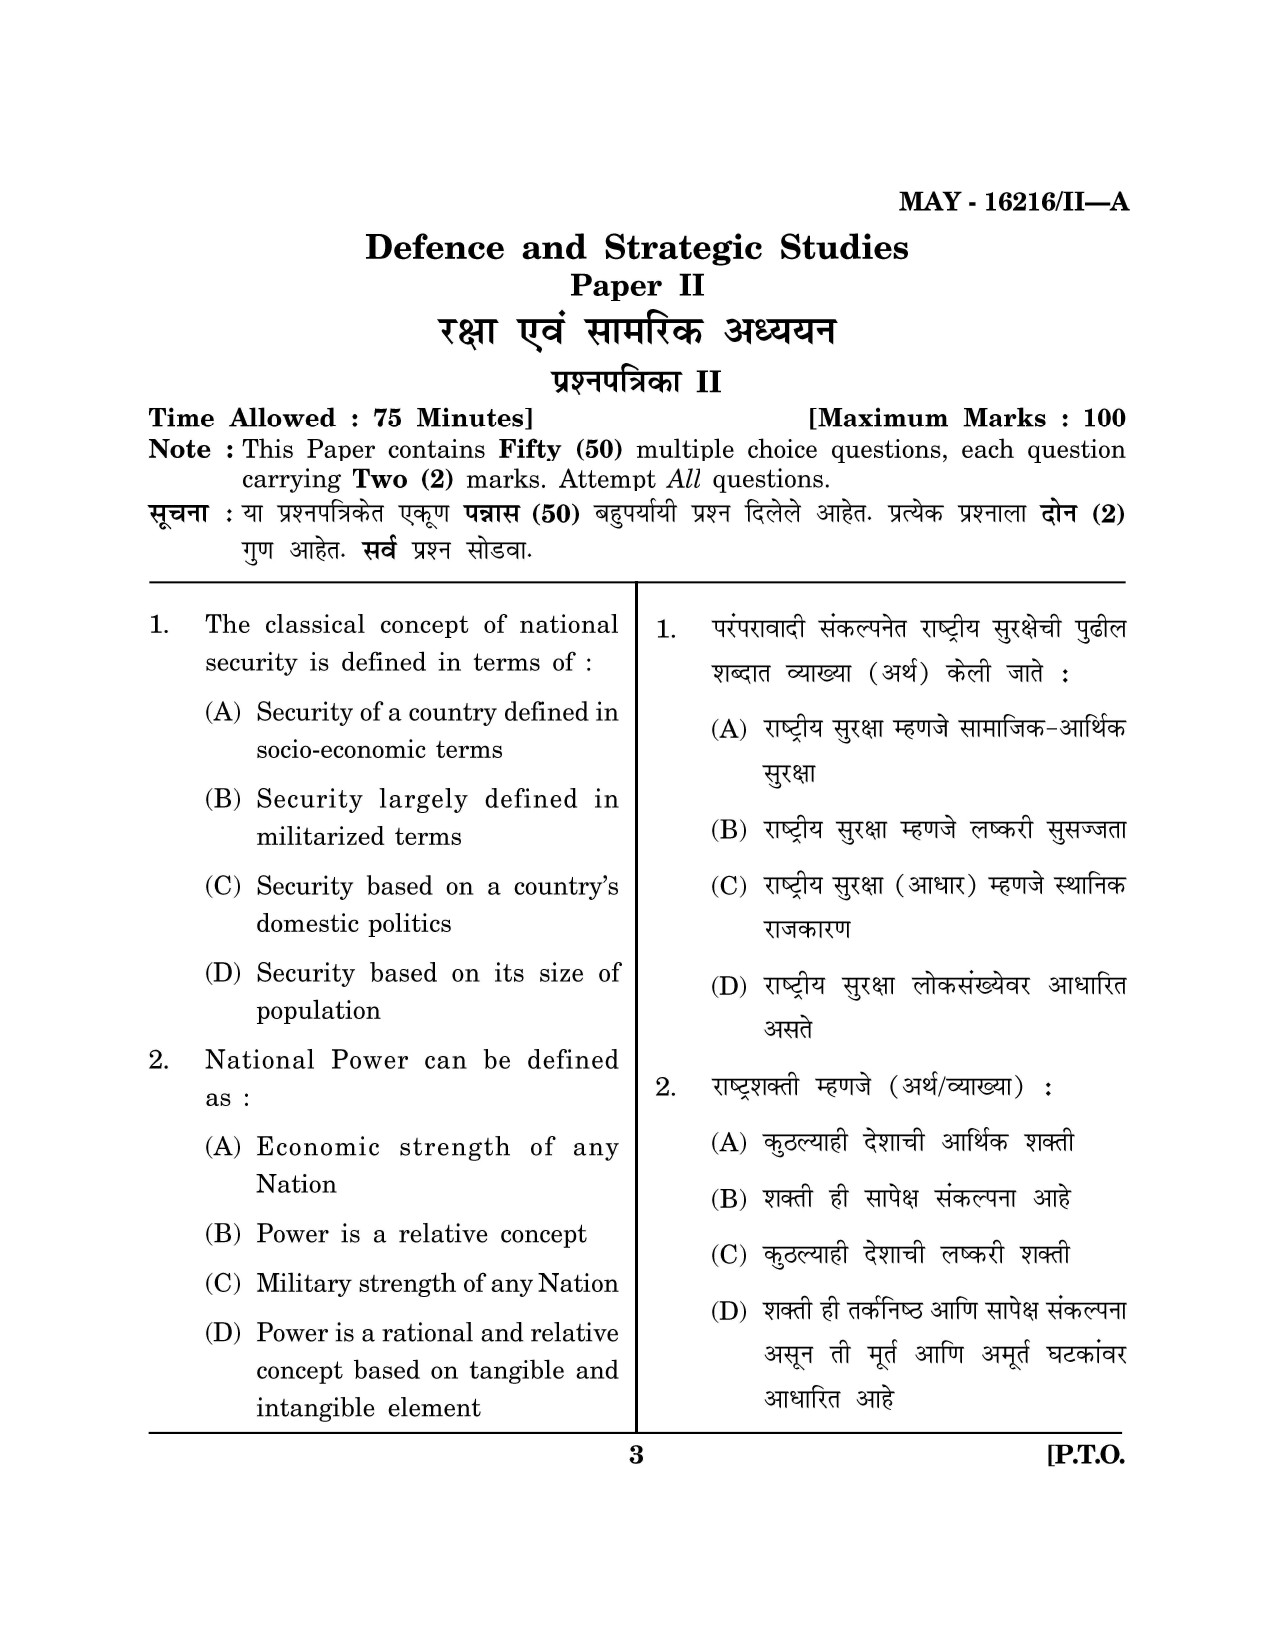 Maharashtra SET Defence and Strategic Studies Question Paper II May 2016 2